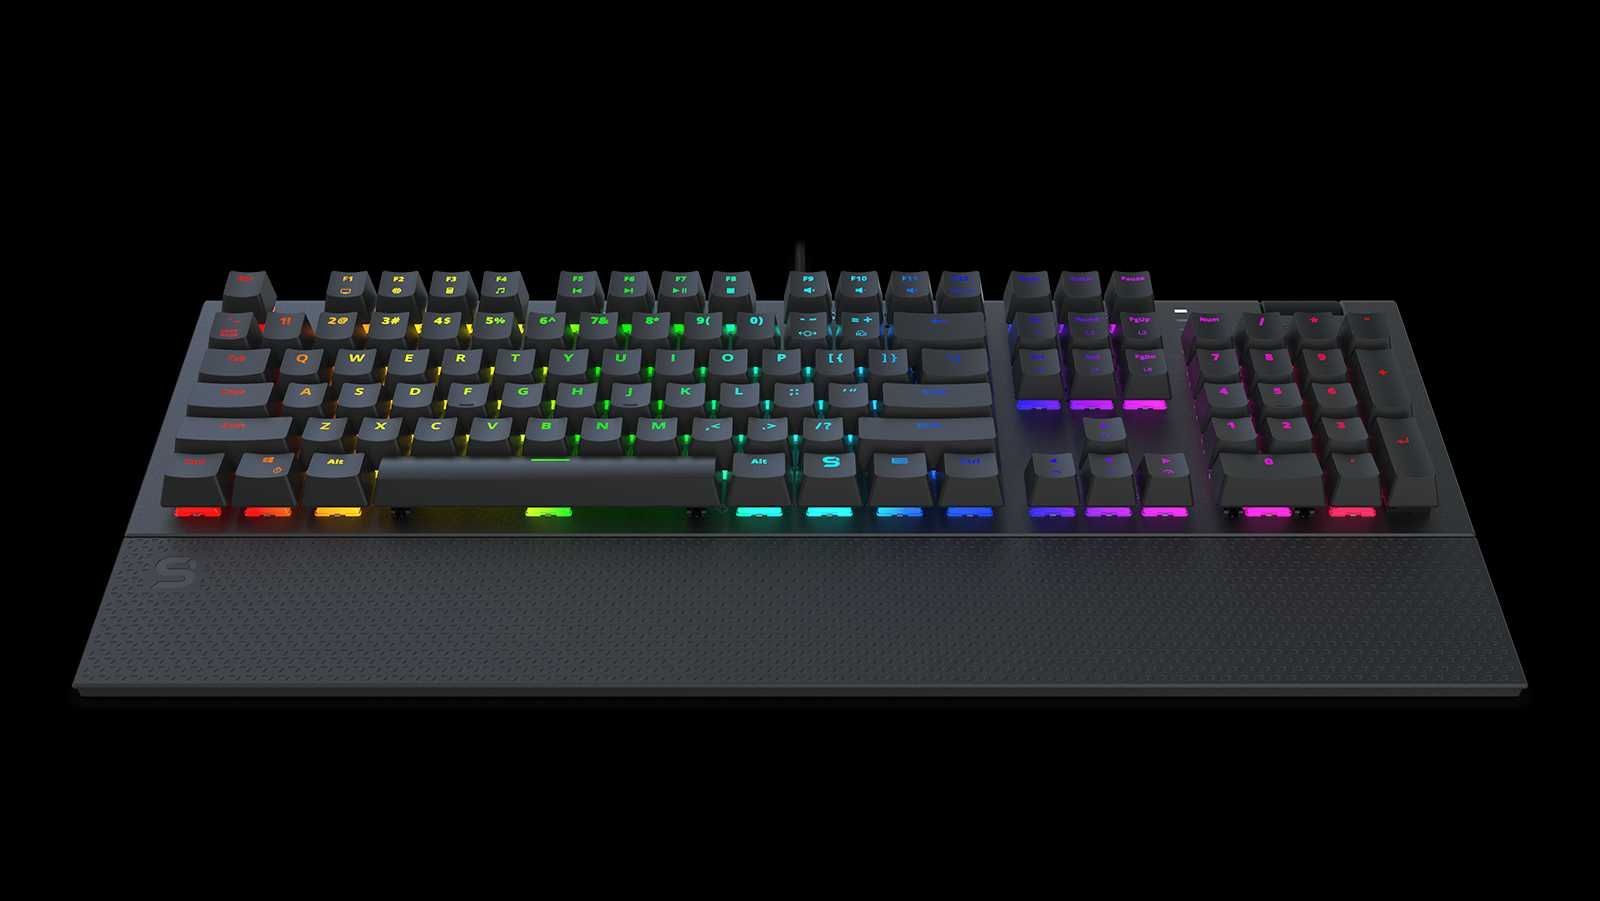 Tastatura Mecanica SPC Gear GK650K Omnis, Kailh Brown, RGB, Neagra